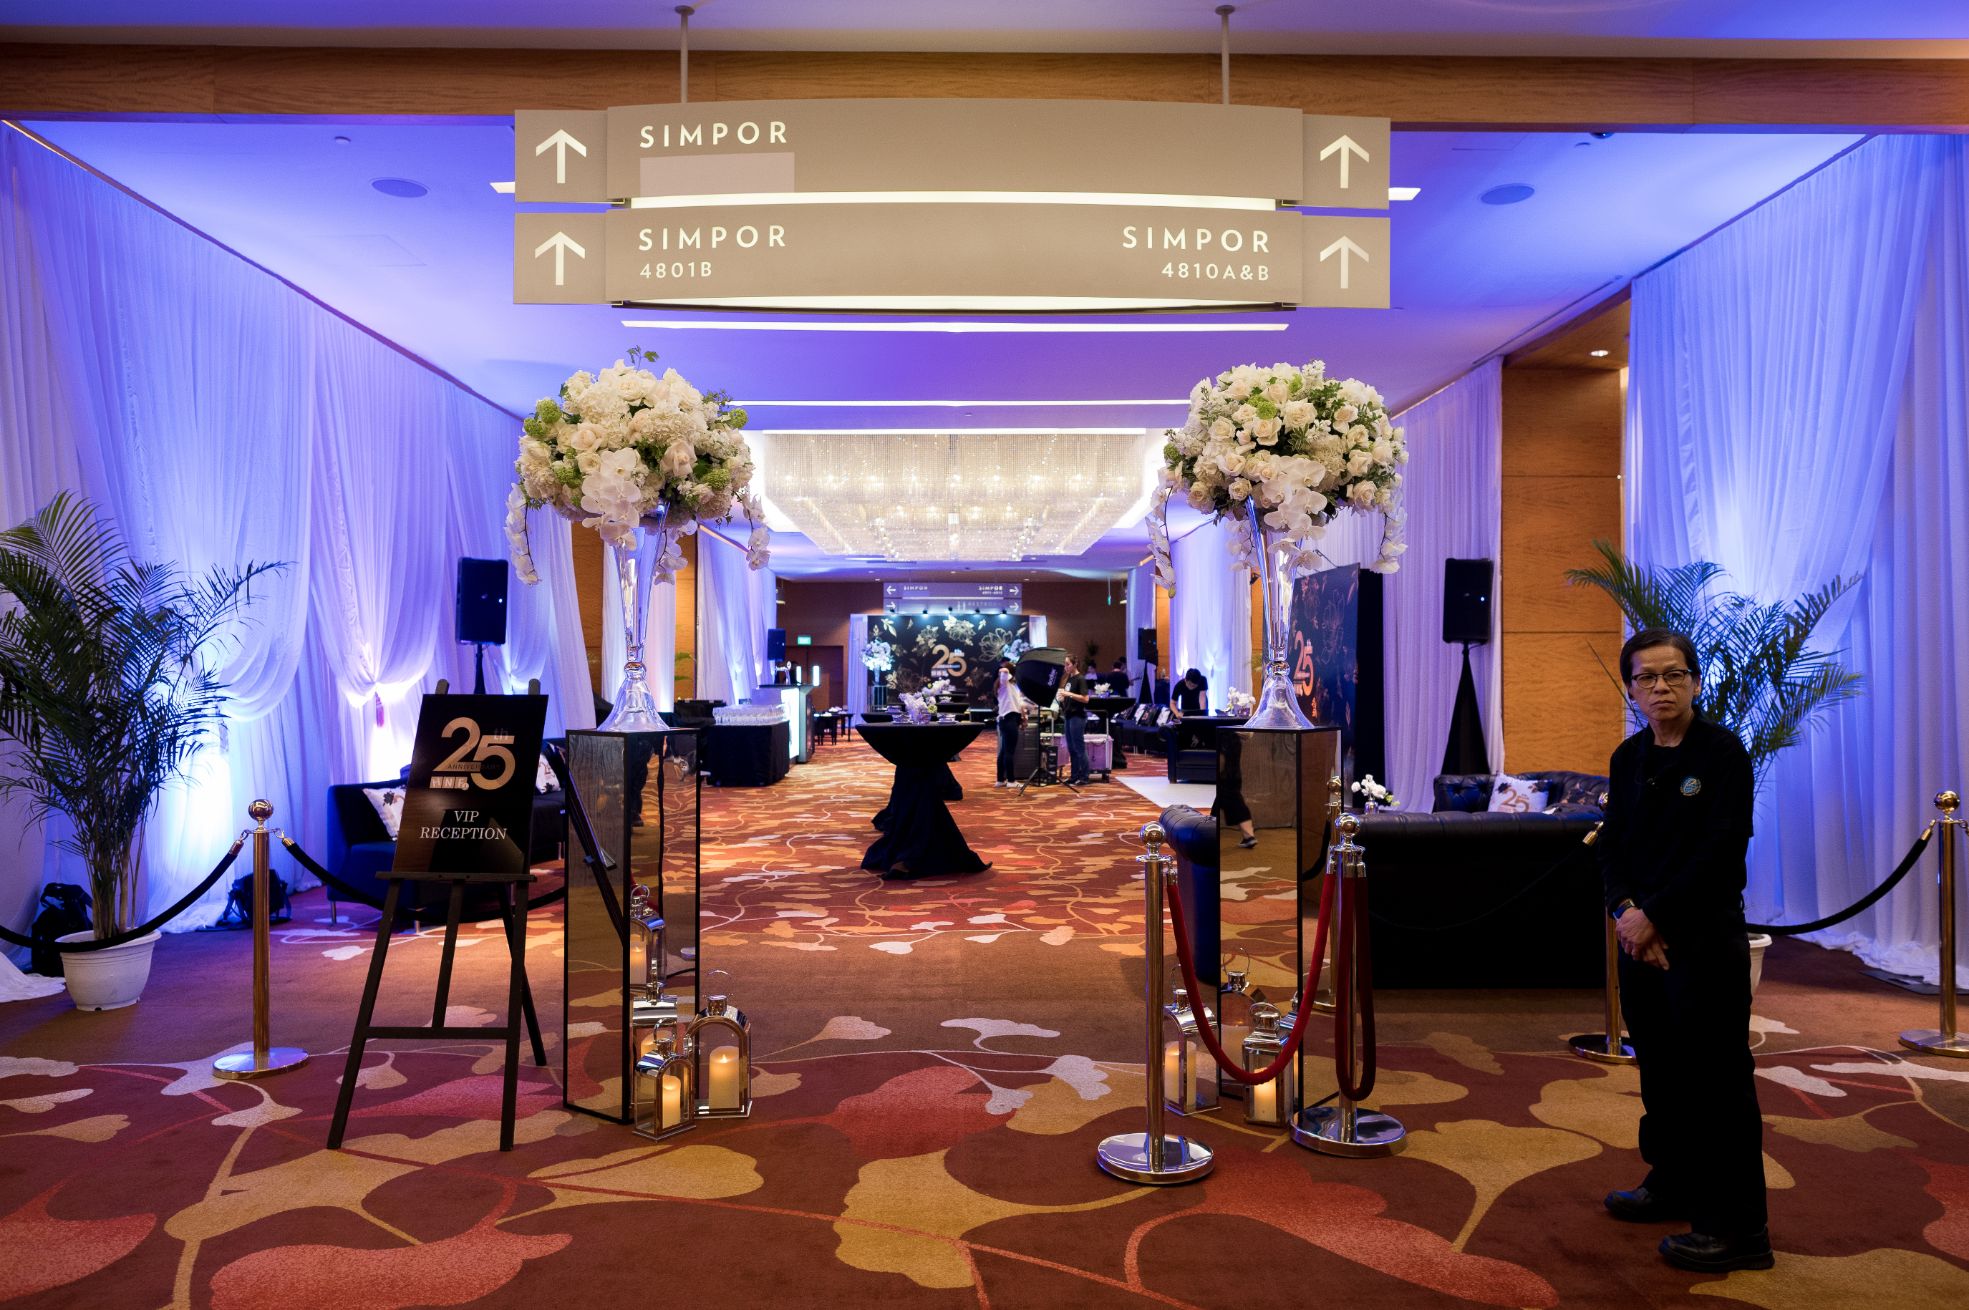 Marina Bay Sands Wedding Venue Singapore [Hold Your Wedding Here]